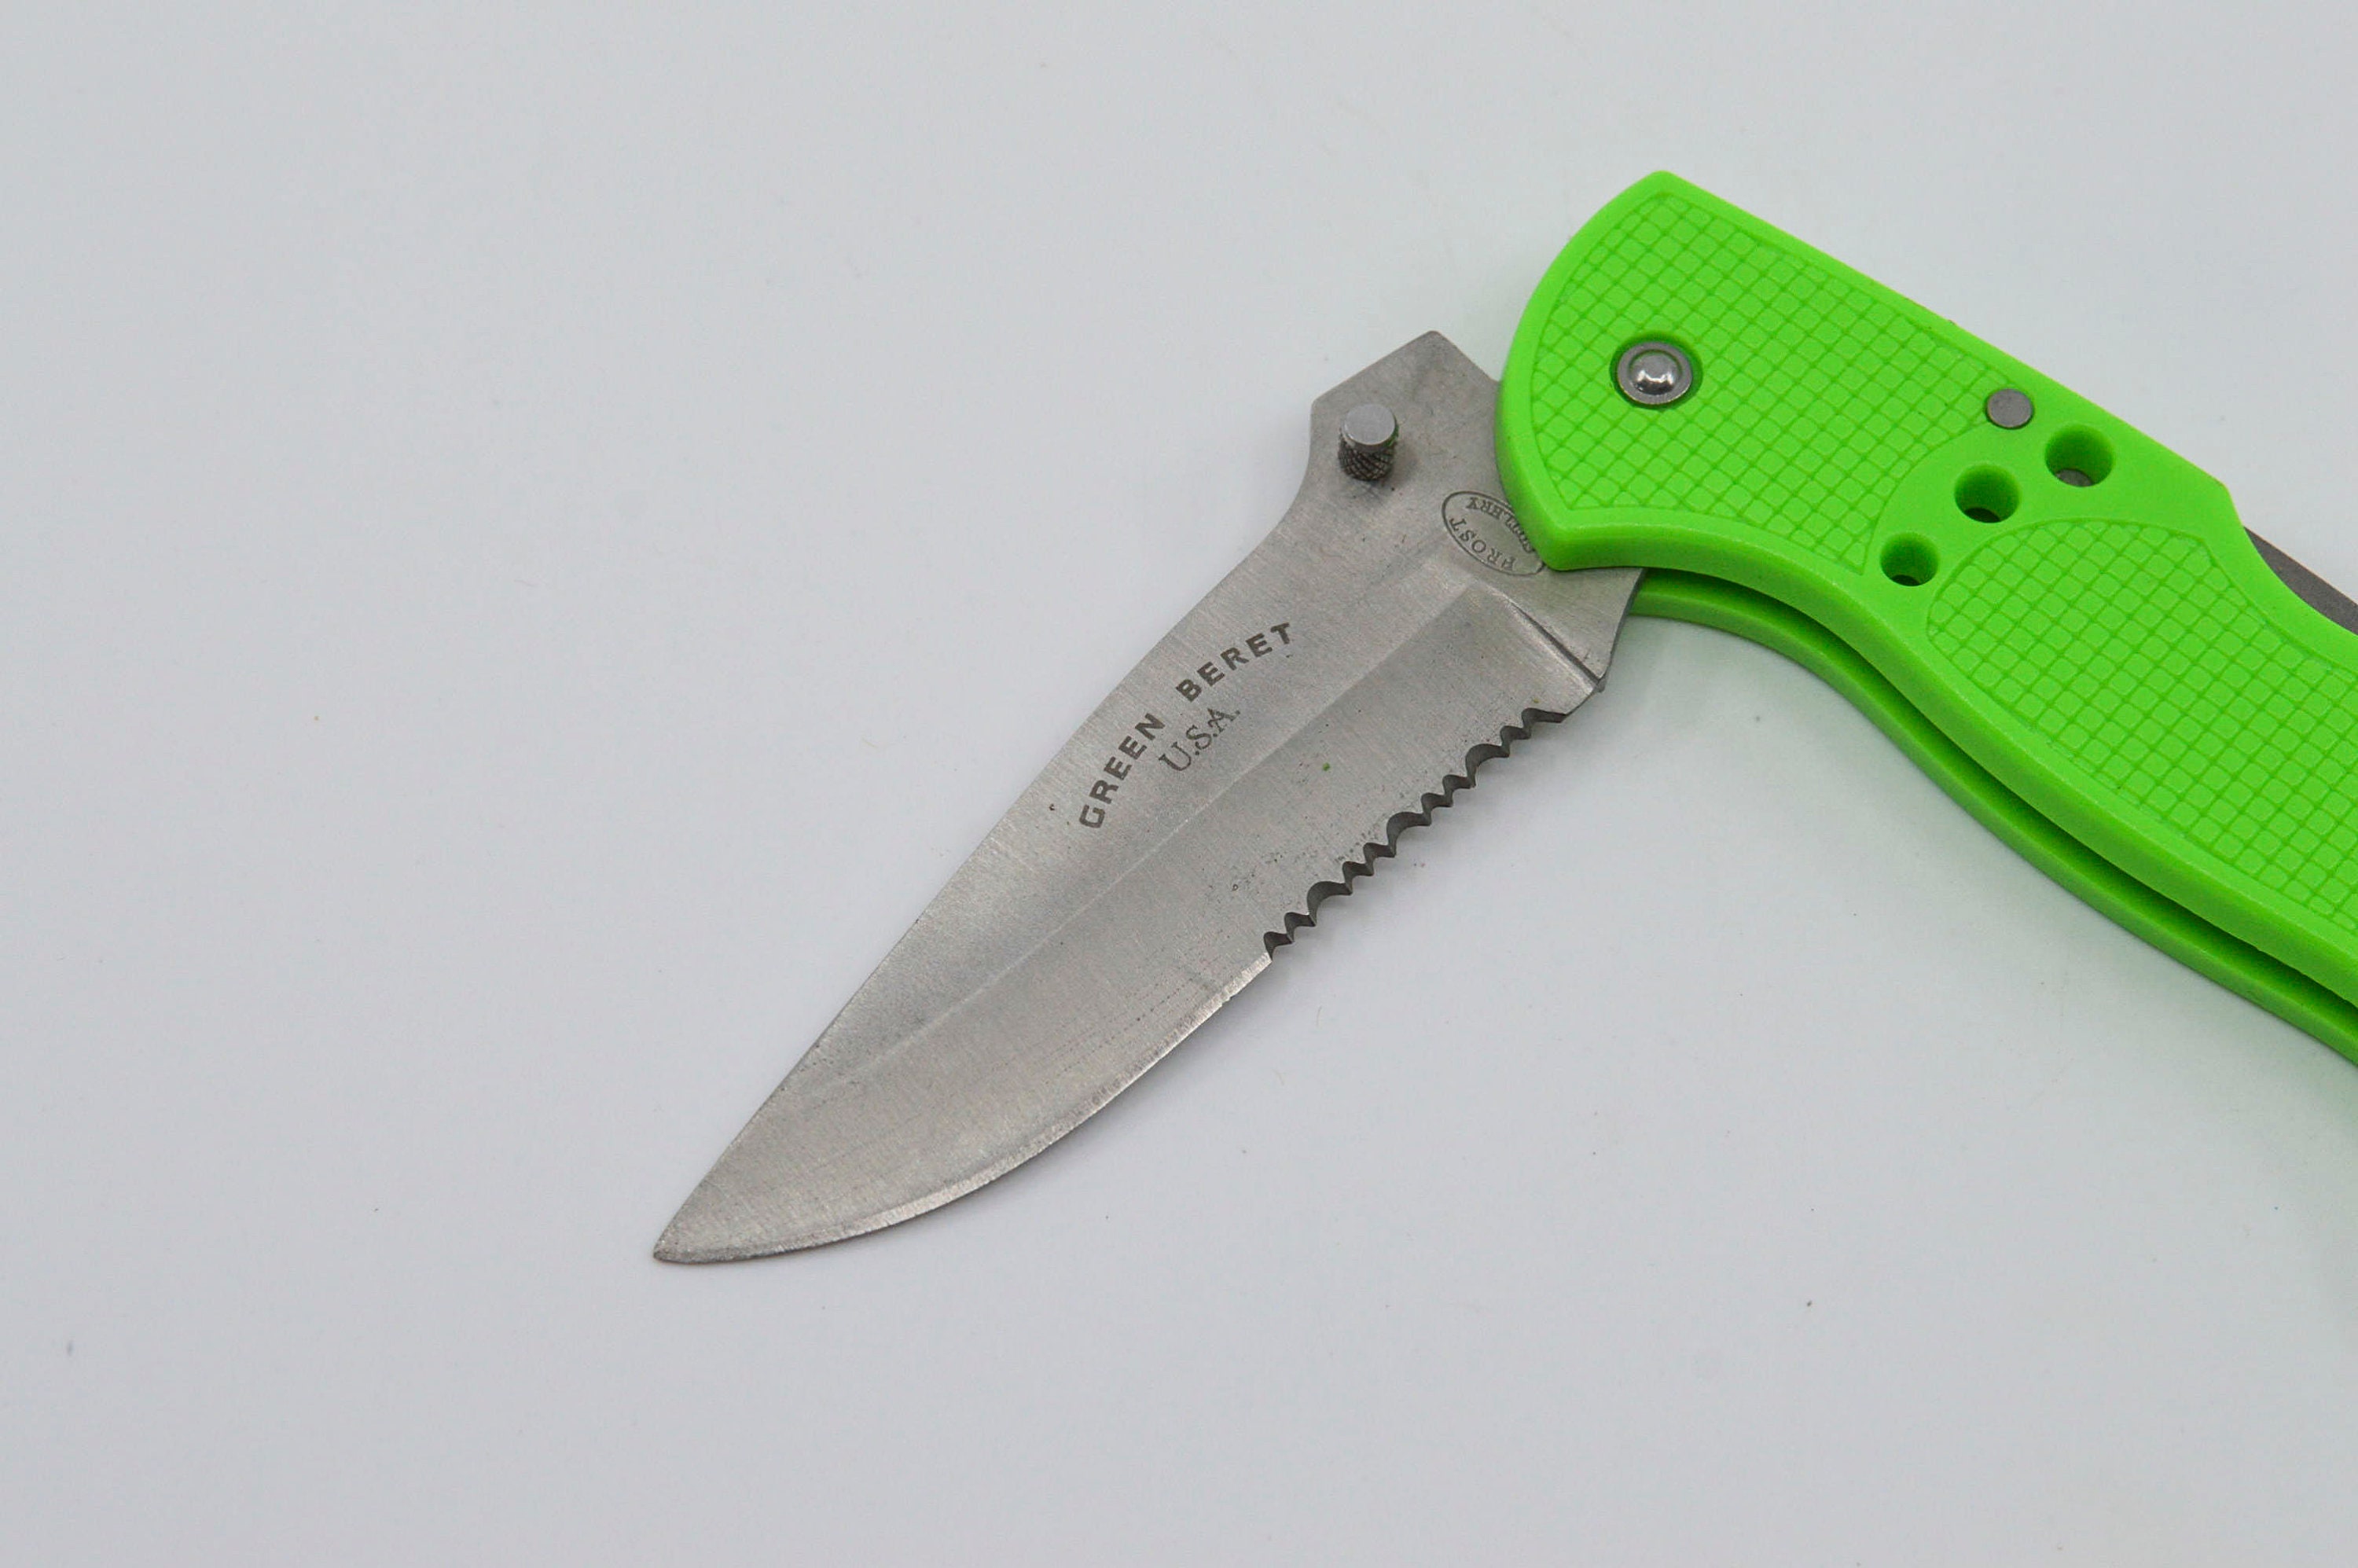 Greenlee Folding Utility Knife - Heavy Duty — Telecom Specialties